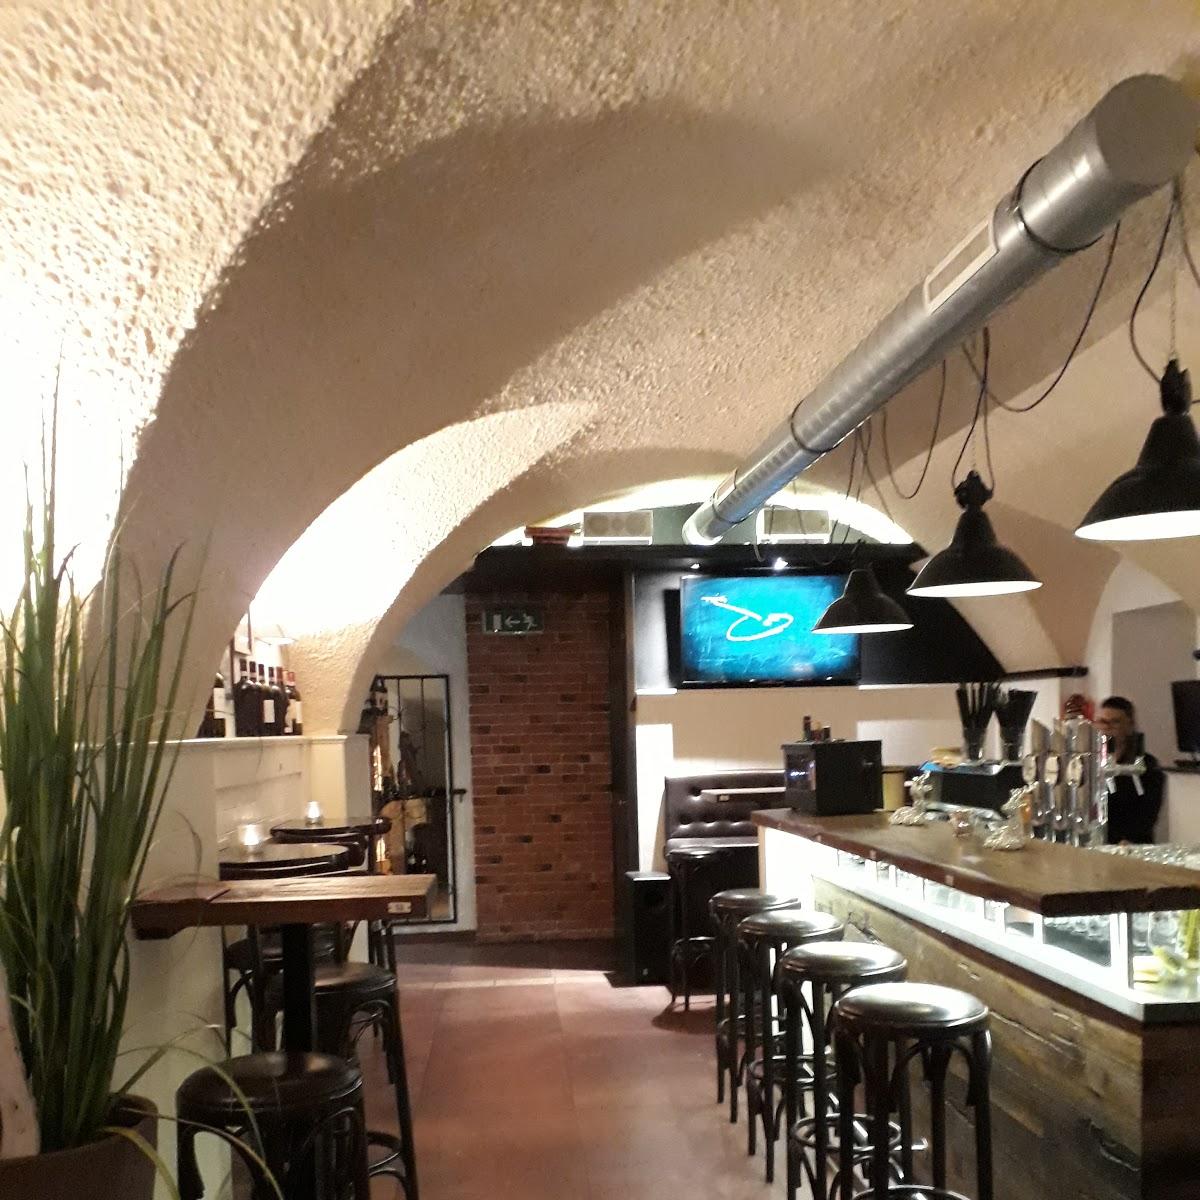 Restaurant "Toscanini | Pizza Pasta Steak" in Kirchdorf an der Krems